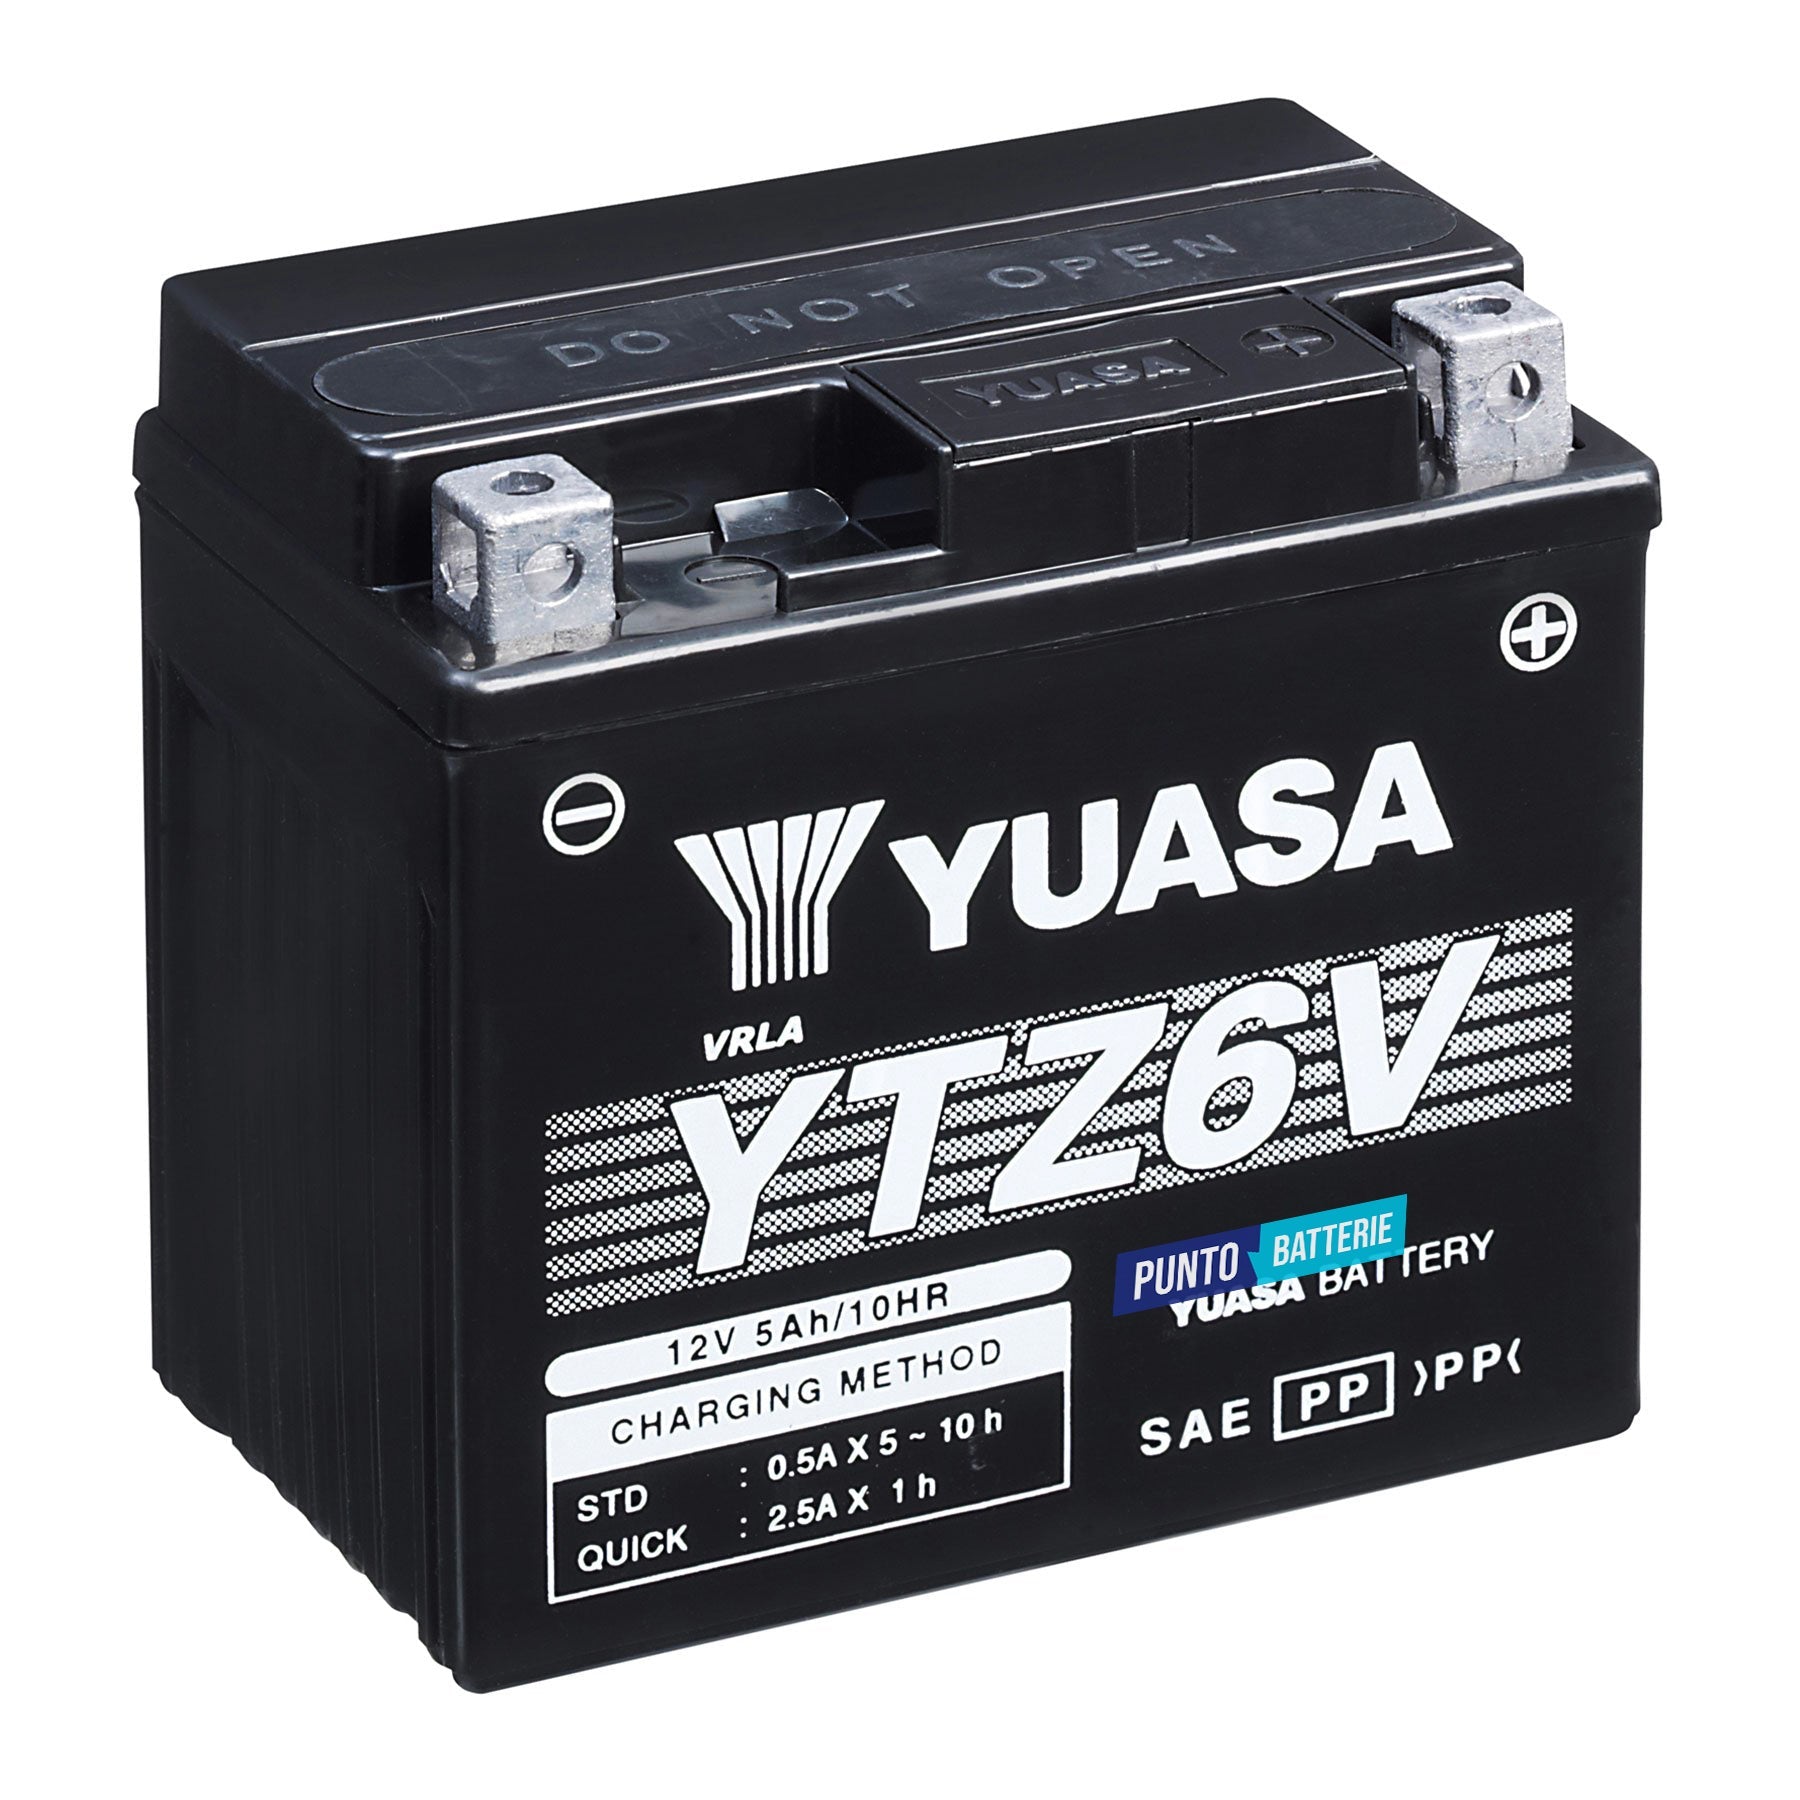 Batteria originale Yuasa YTZ YTZ6V, dimensioni 113 x 70 x 105, polo positivo a destra, 12 volt, 5 amperora, 90 ampere. Batteria per moto, scooter e powersport.